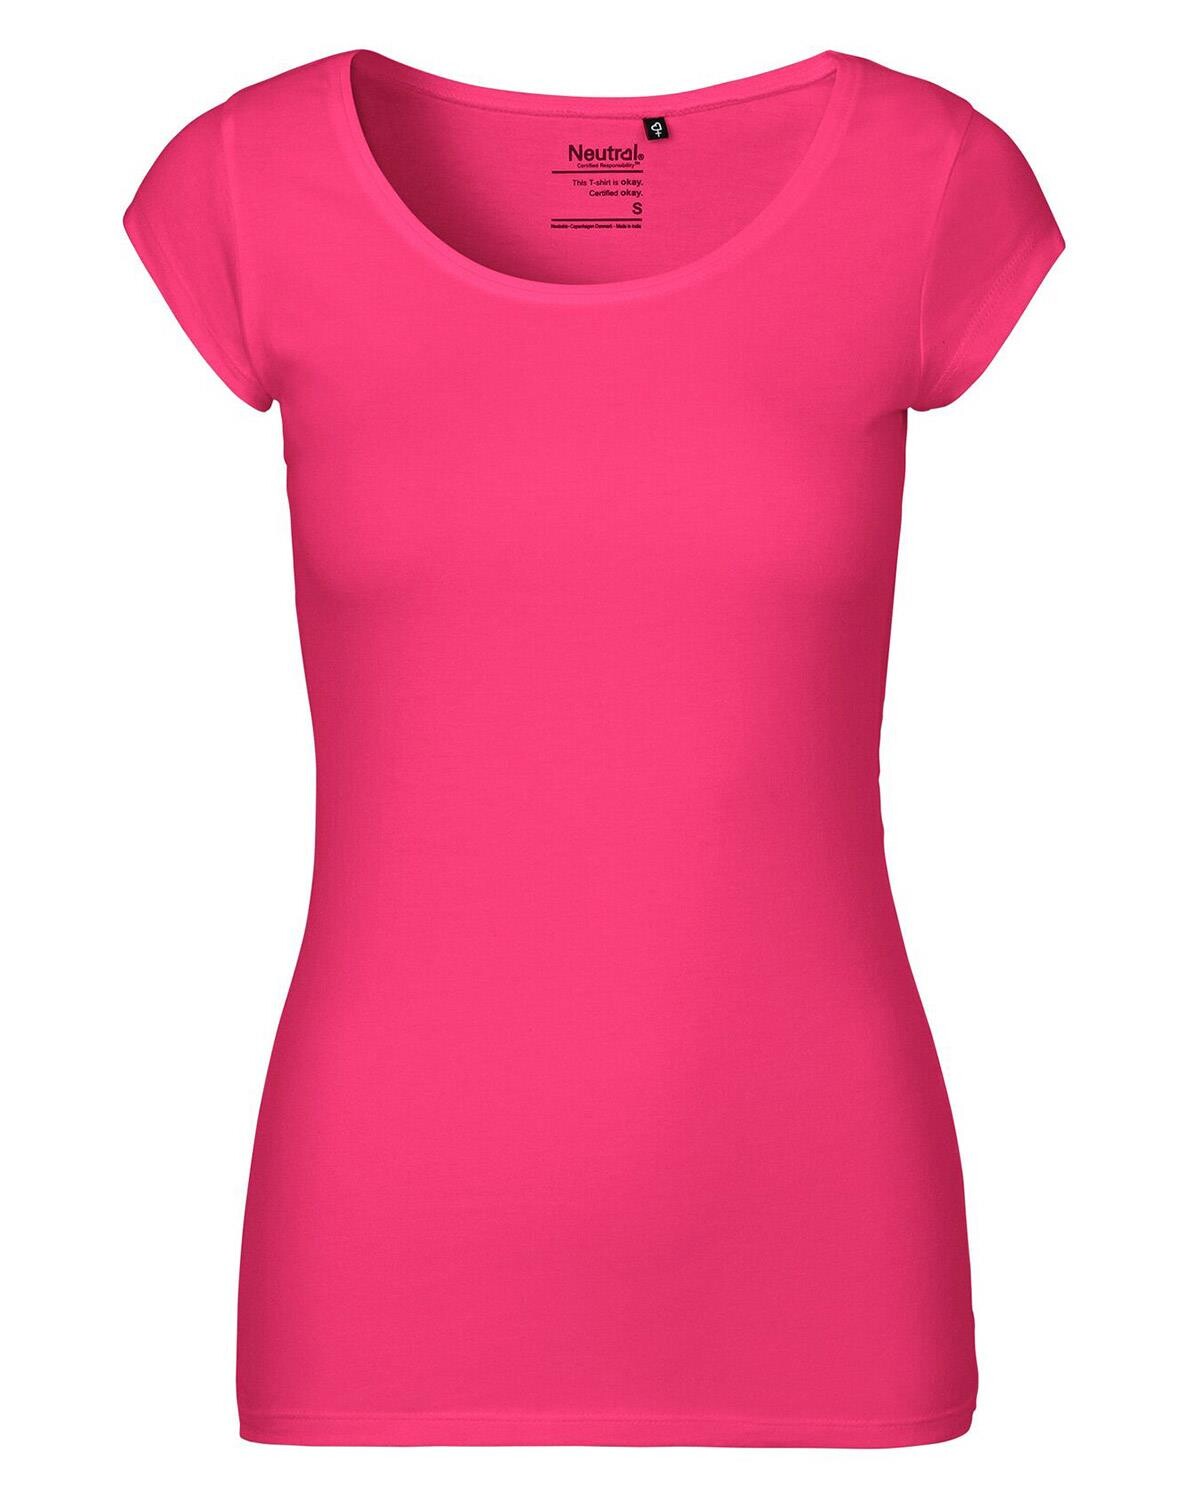 Neutral Organic - Ladies Round neck Short Sleeve Tee (Pink, M)